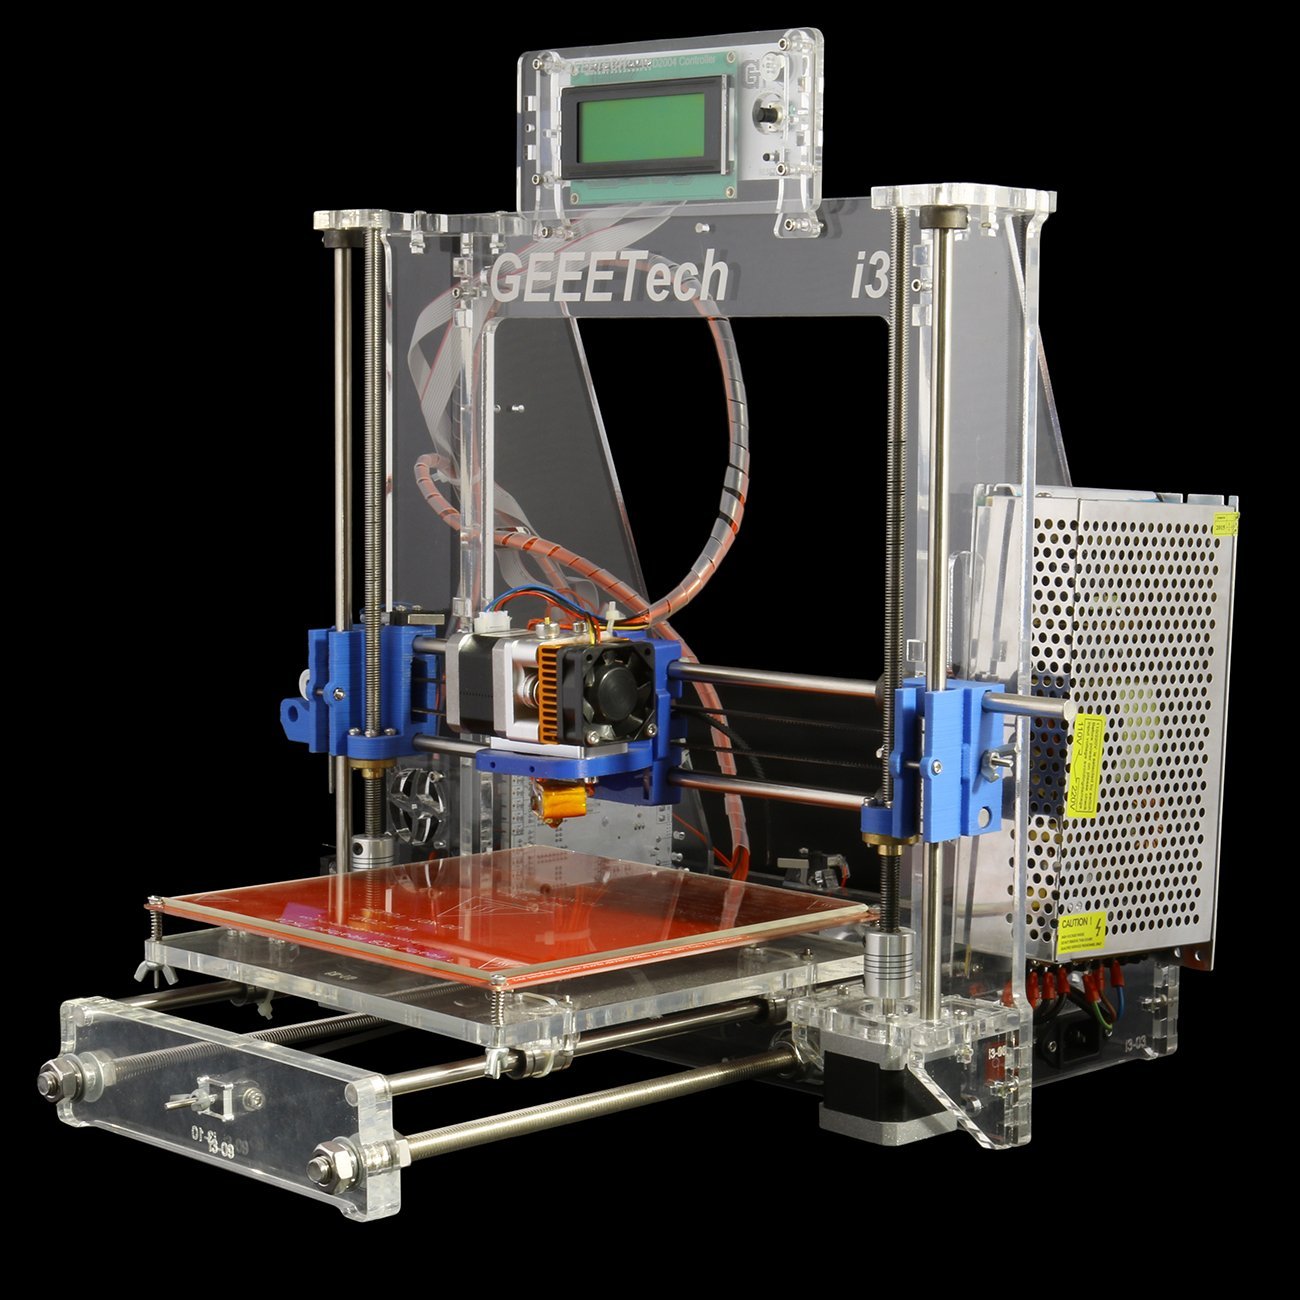  A desktop 3D printer with a transparent aluminum frame  